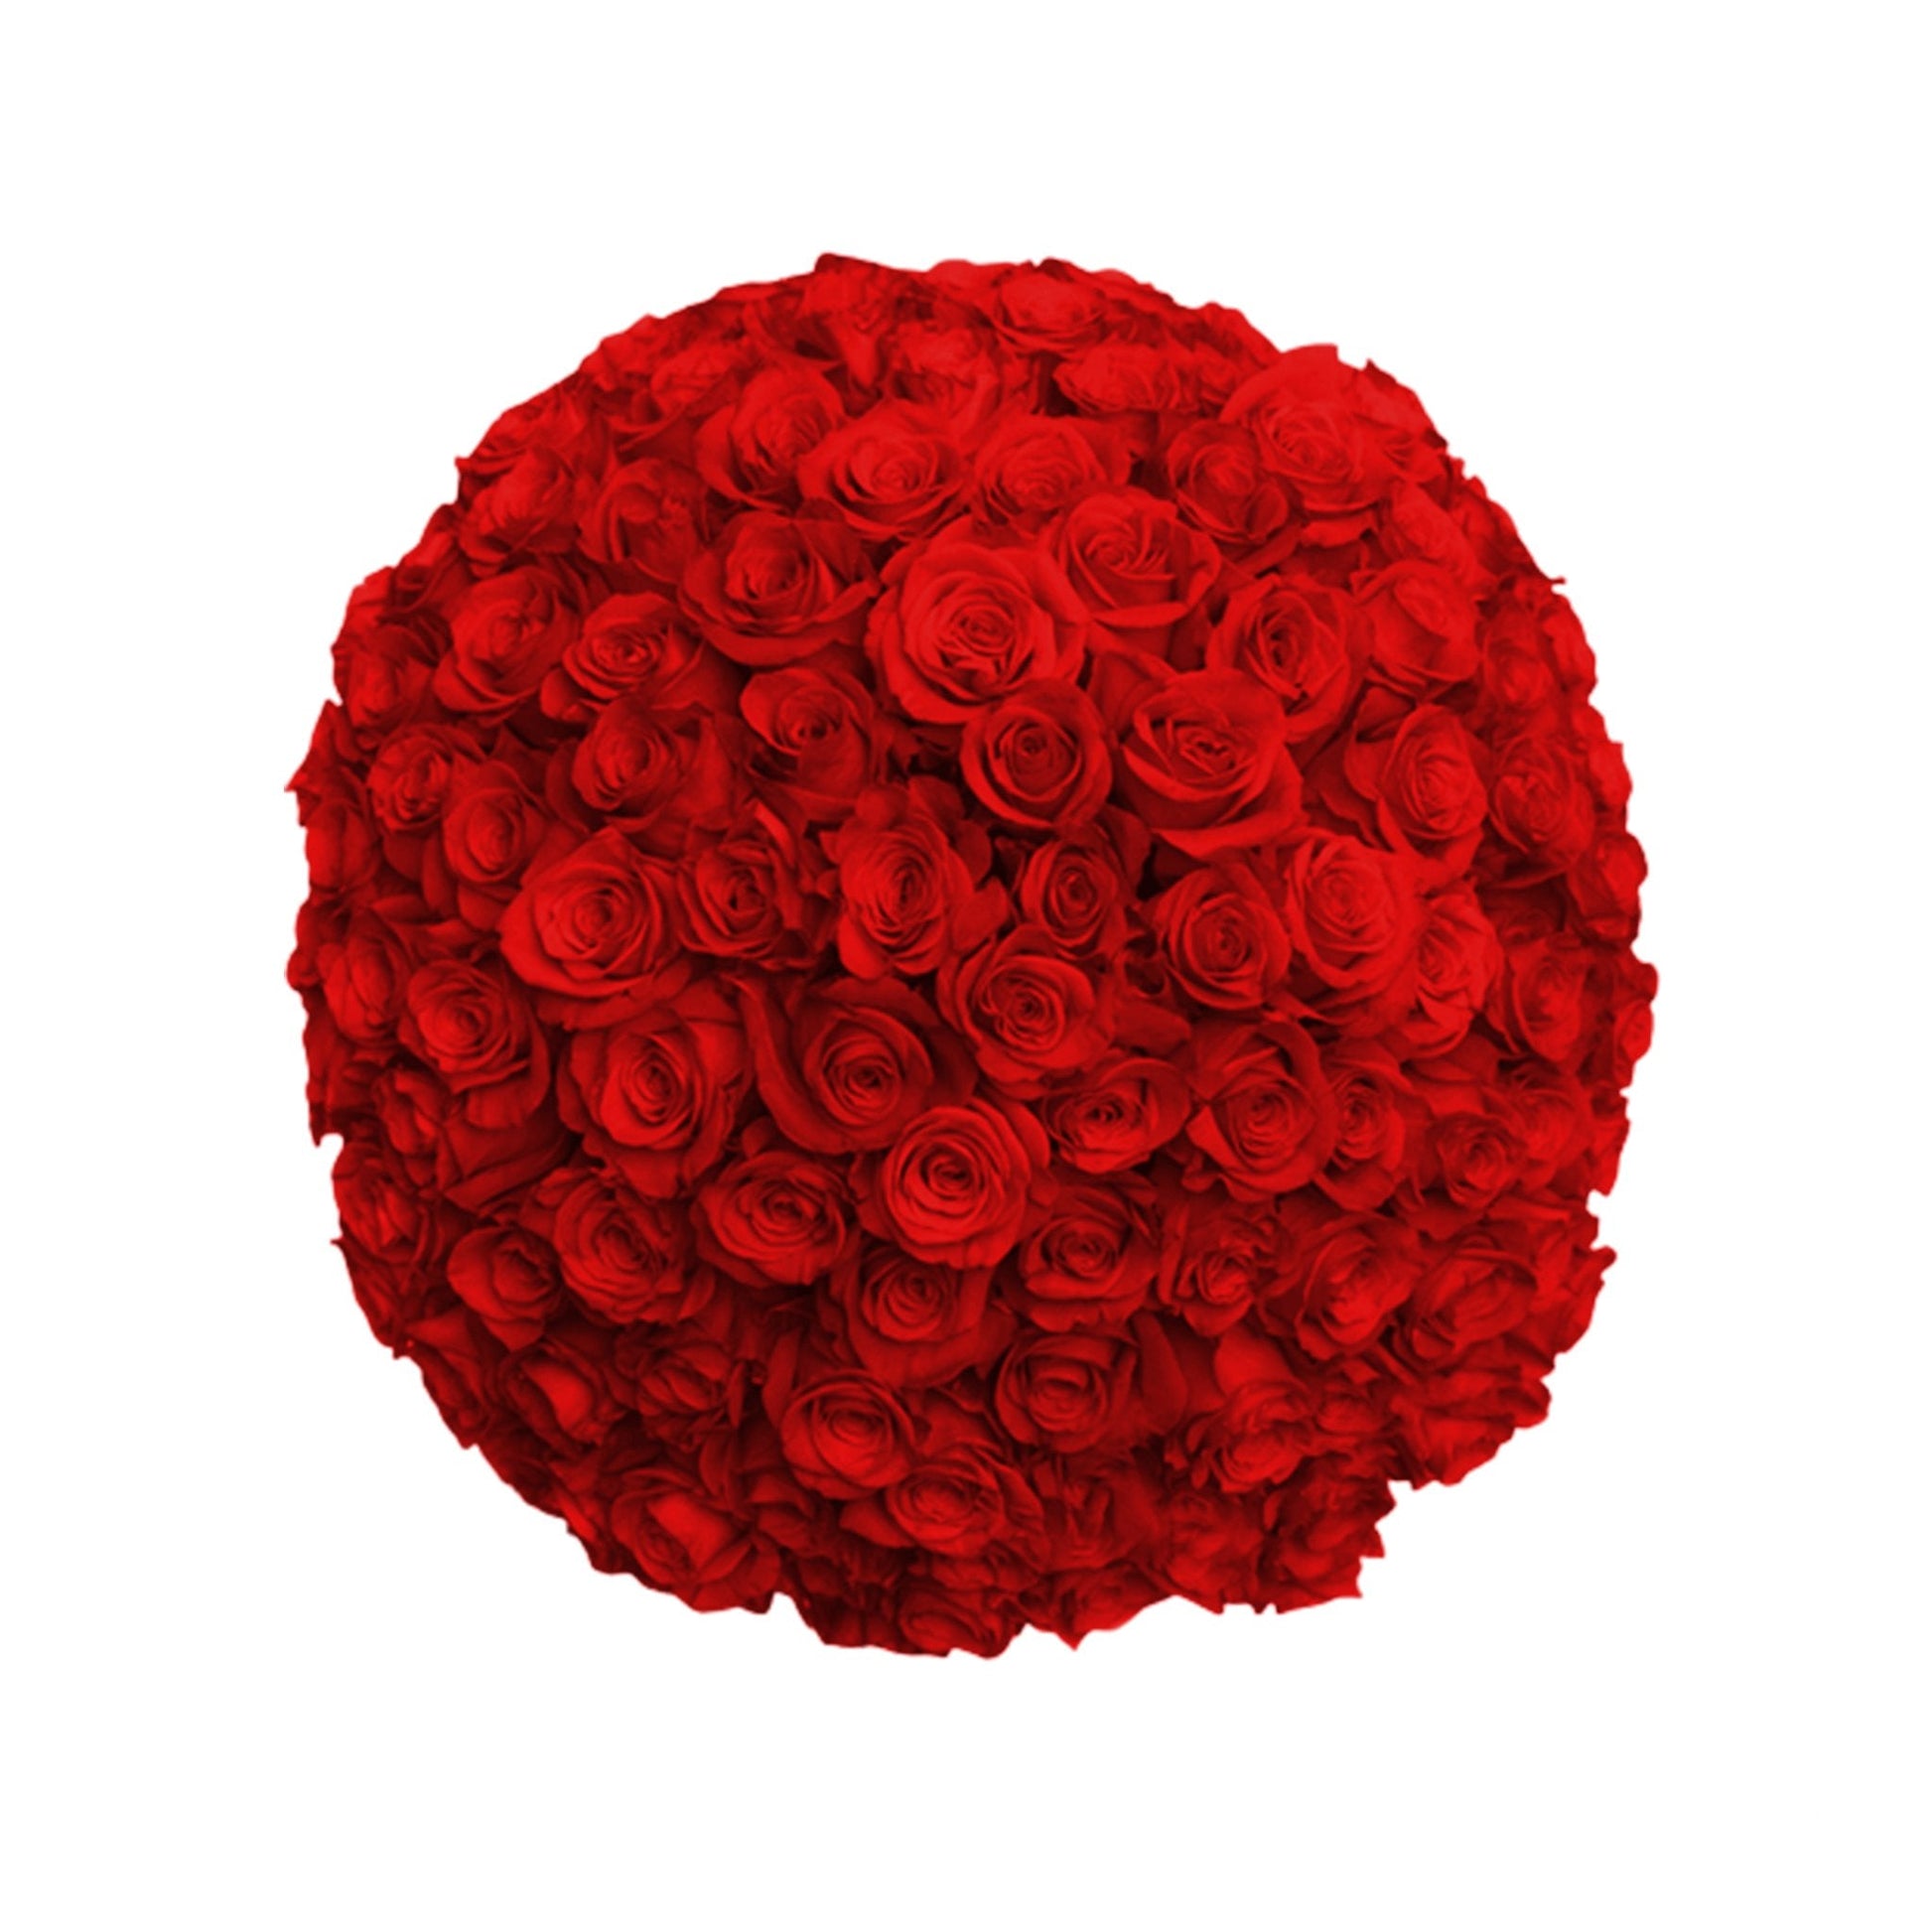 Fresh Roses in a Vase | 100 Red Roses - Floral Arrangement - Flower Delivery Brooklyn